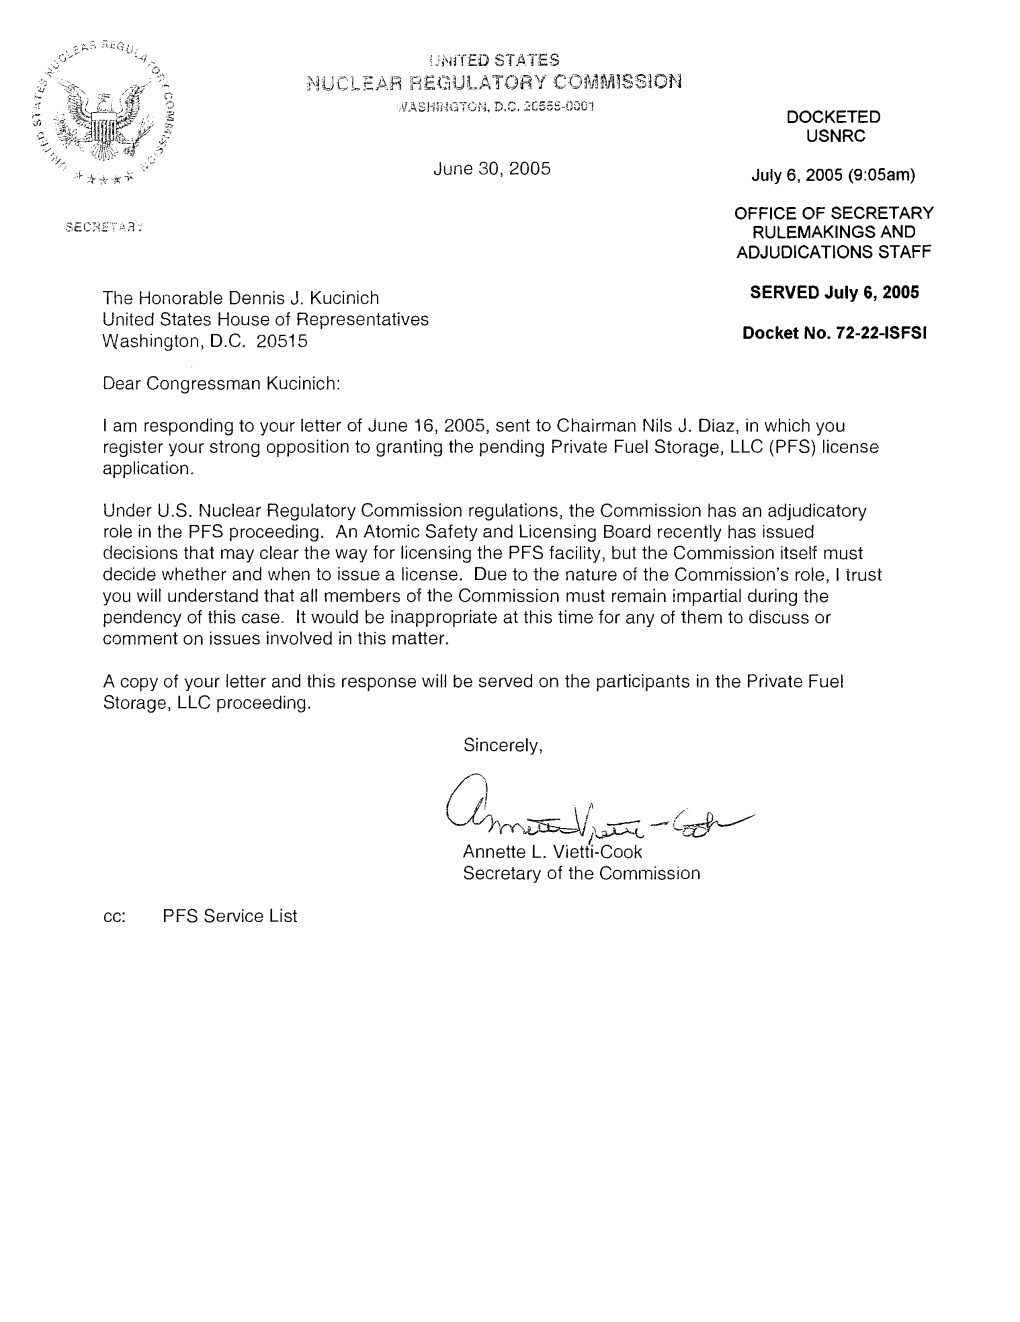 2005/06/30-Letter from Annette L. Vietti-Cook to Congressman Dennis